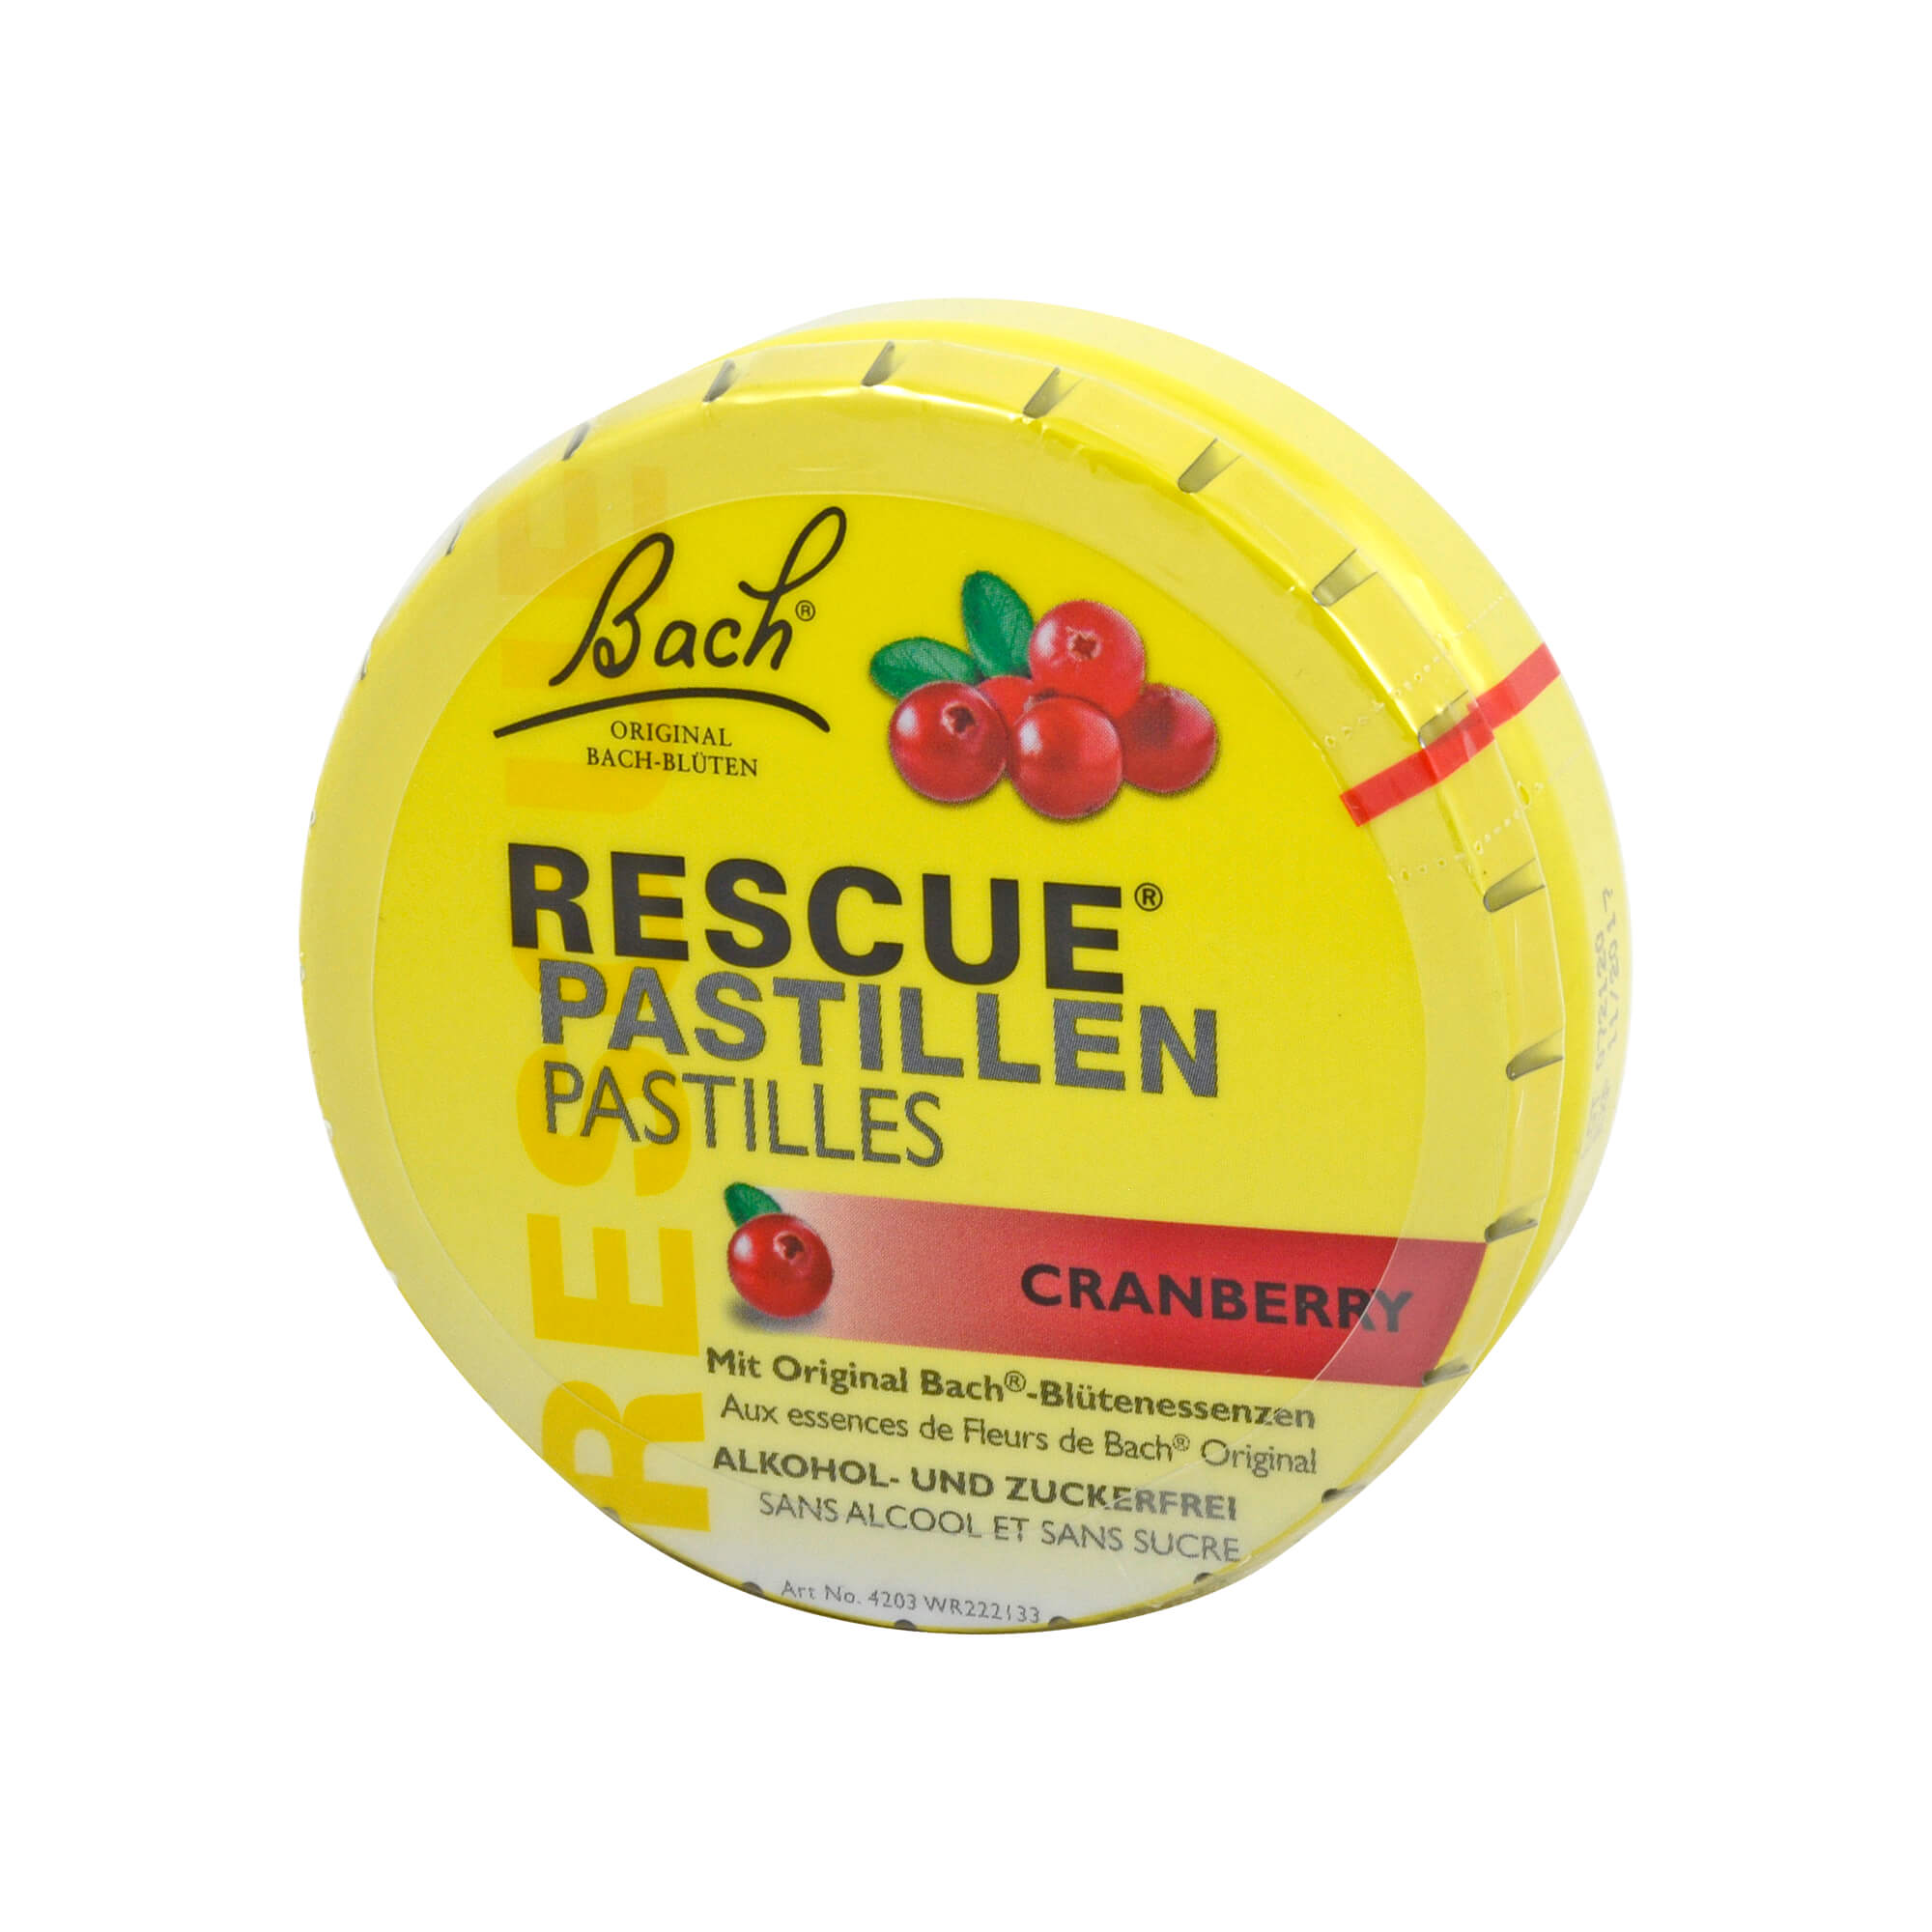 BACH ORIGINAL Rescue Pastillen Cranberry.